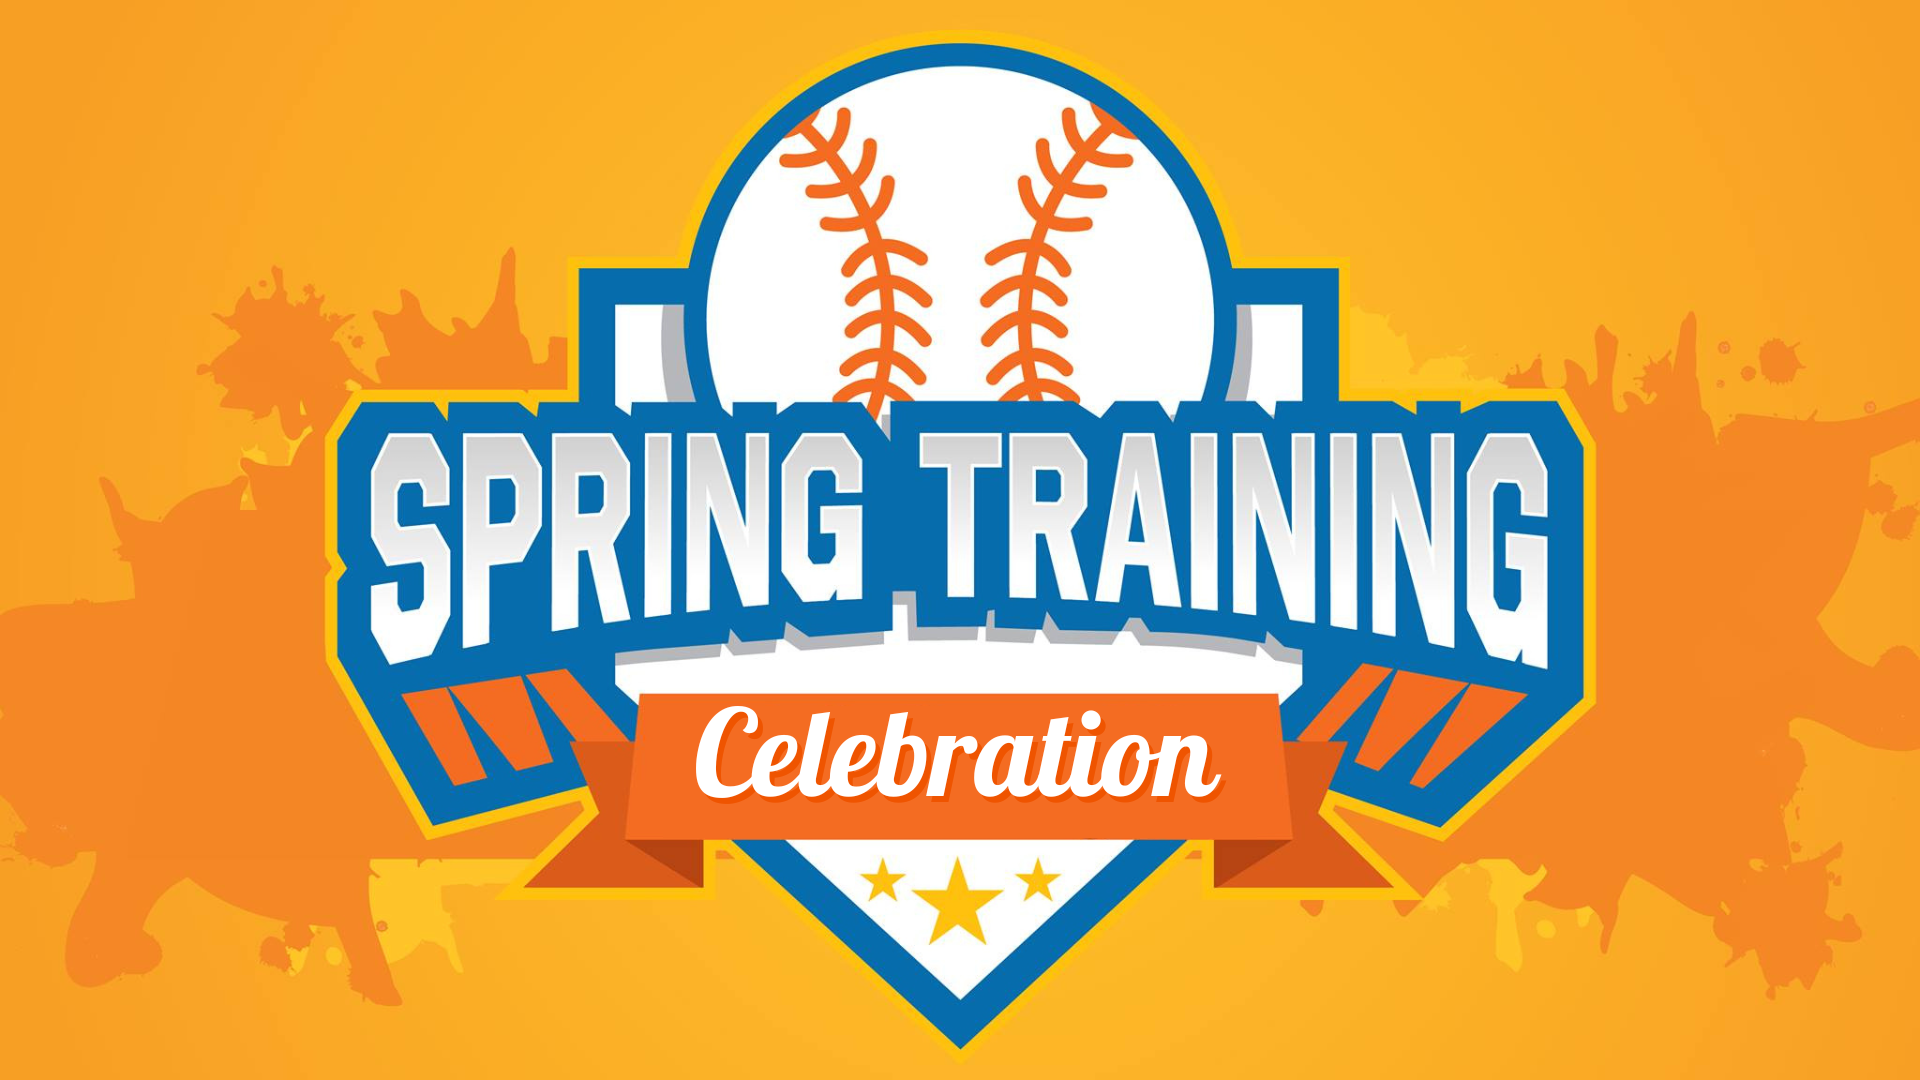 Spring Training celebration event banner